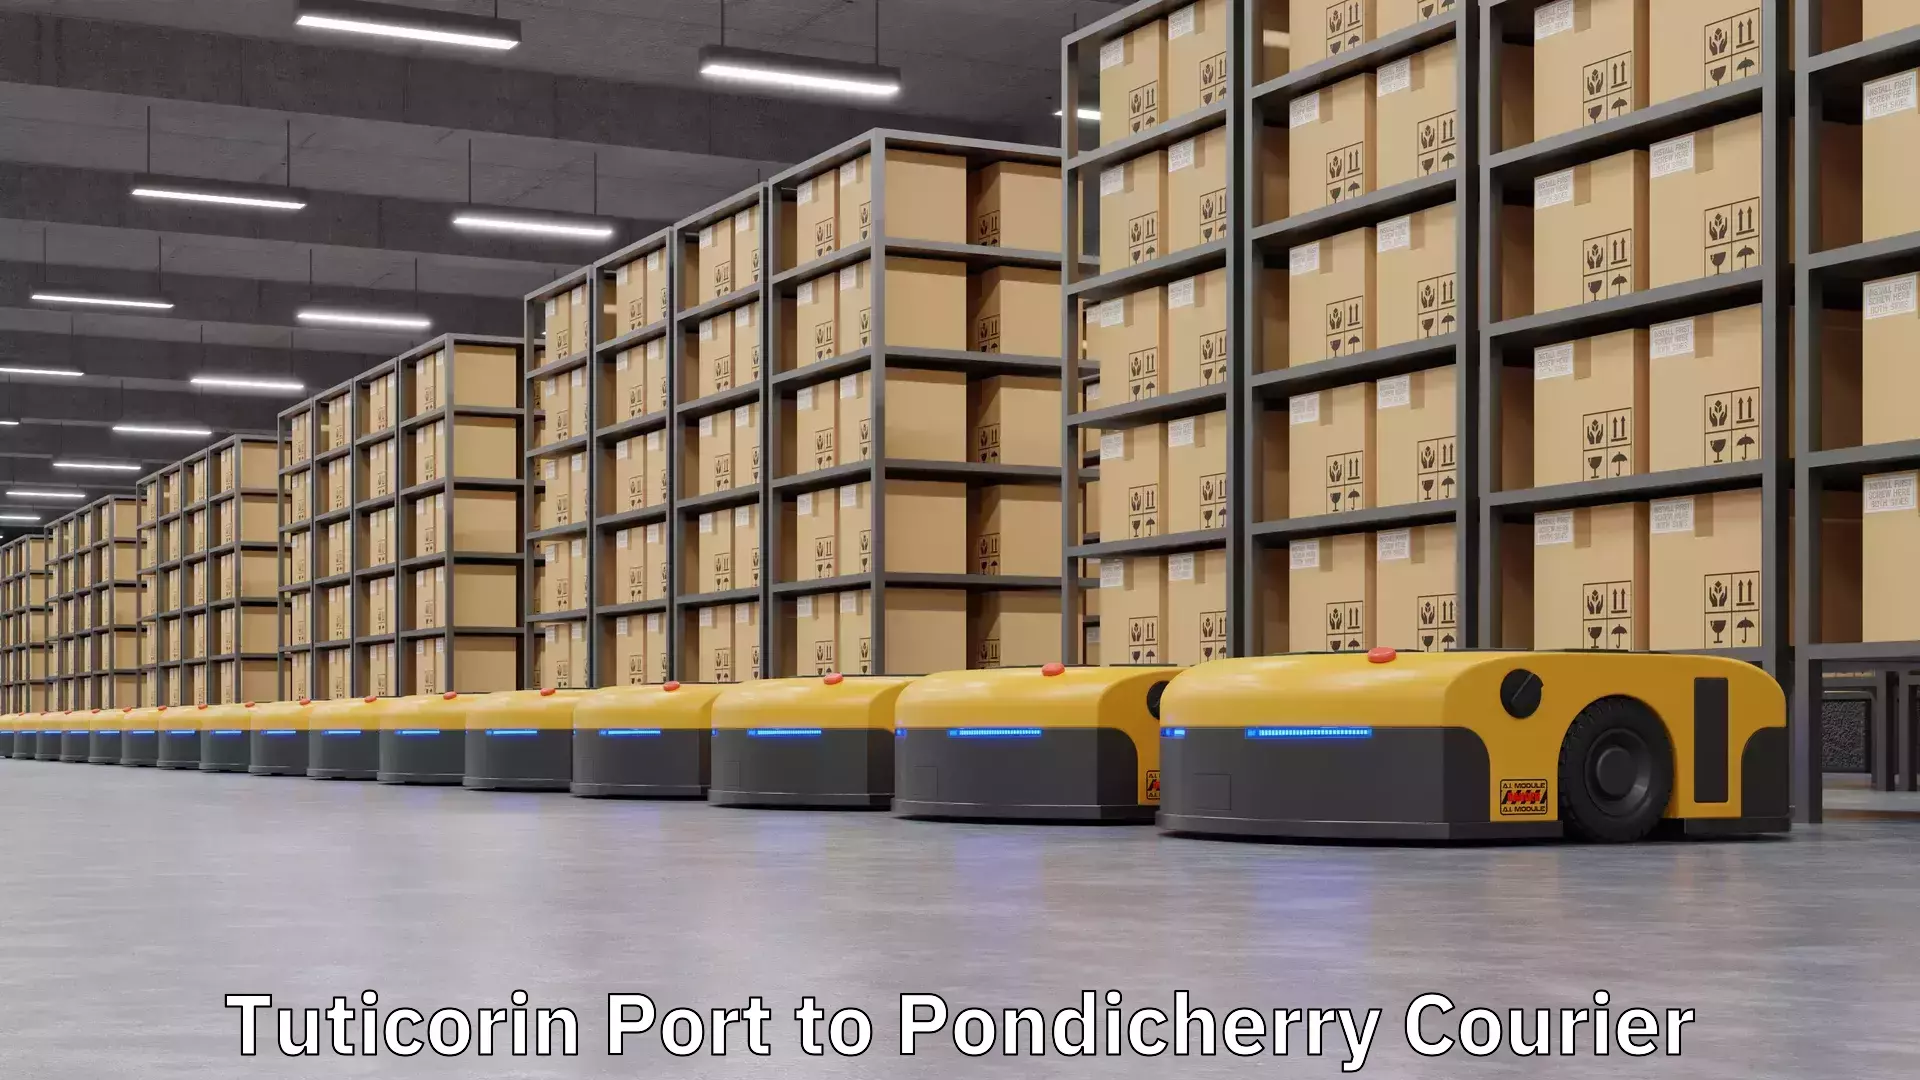 Courier service efficiency Tuticorin Port to Pondicherry